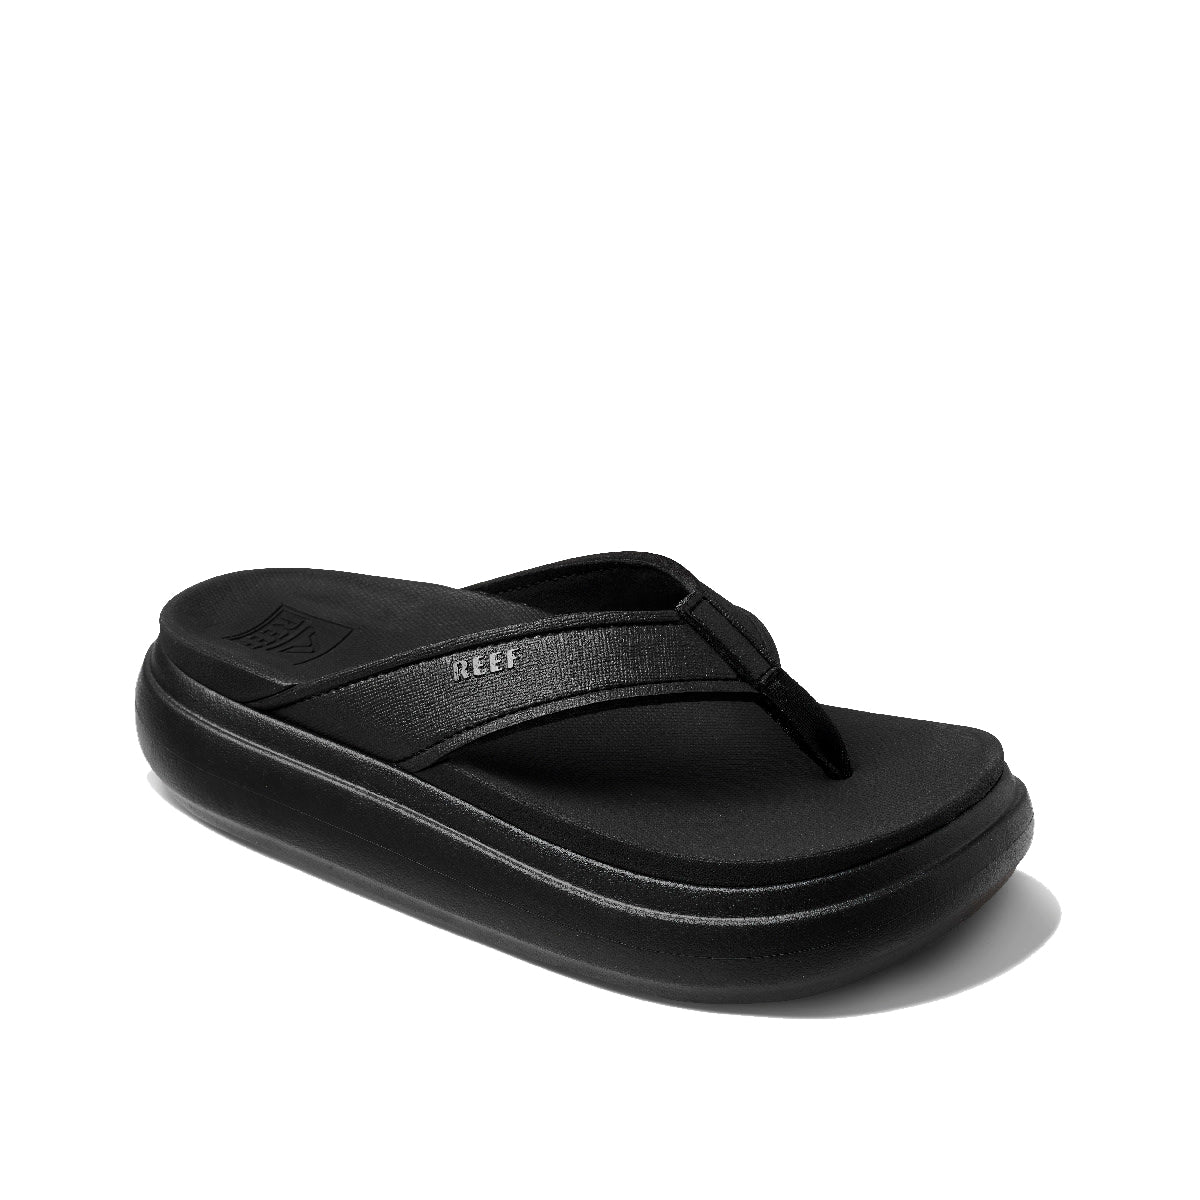 Reef Cushion Bondi Womens Sandals Black-Black 7